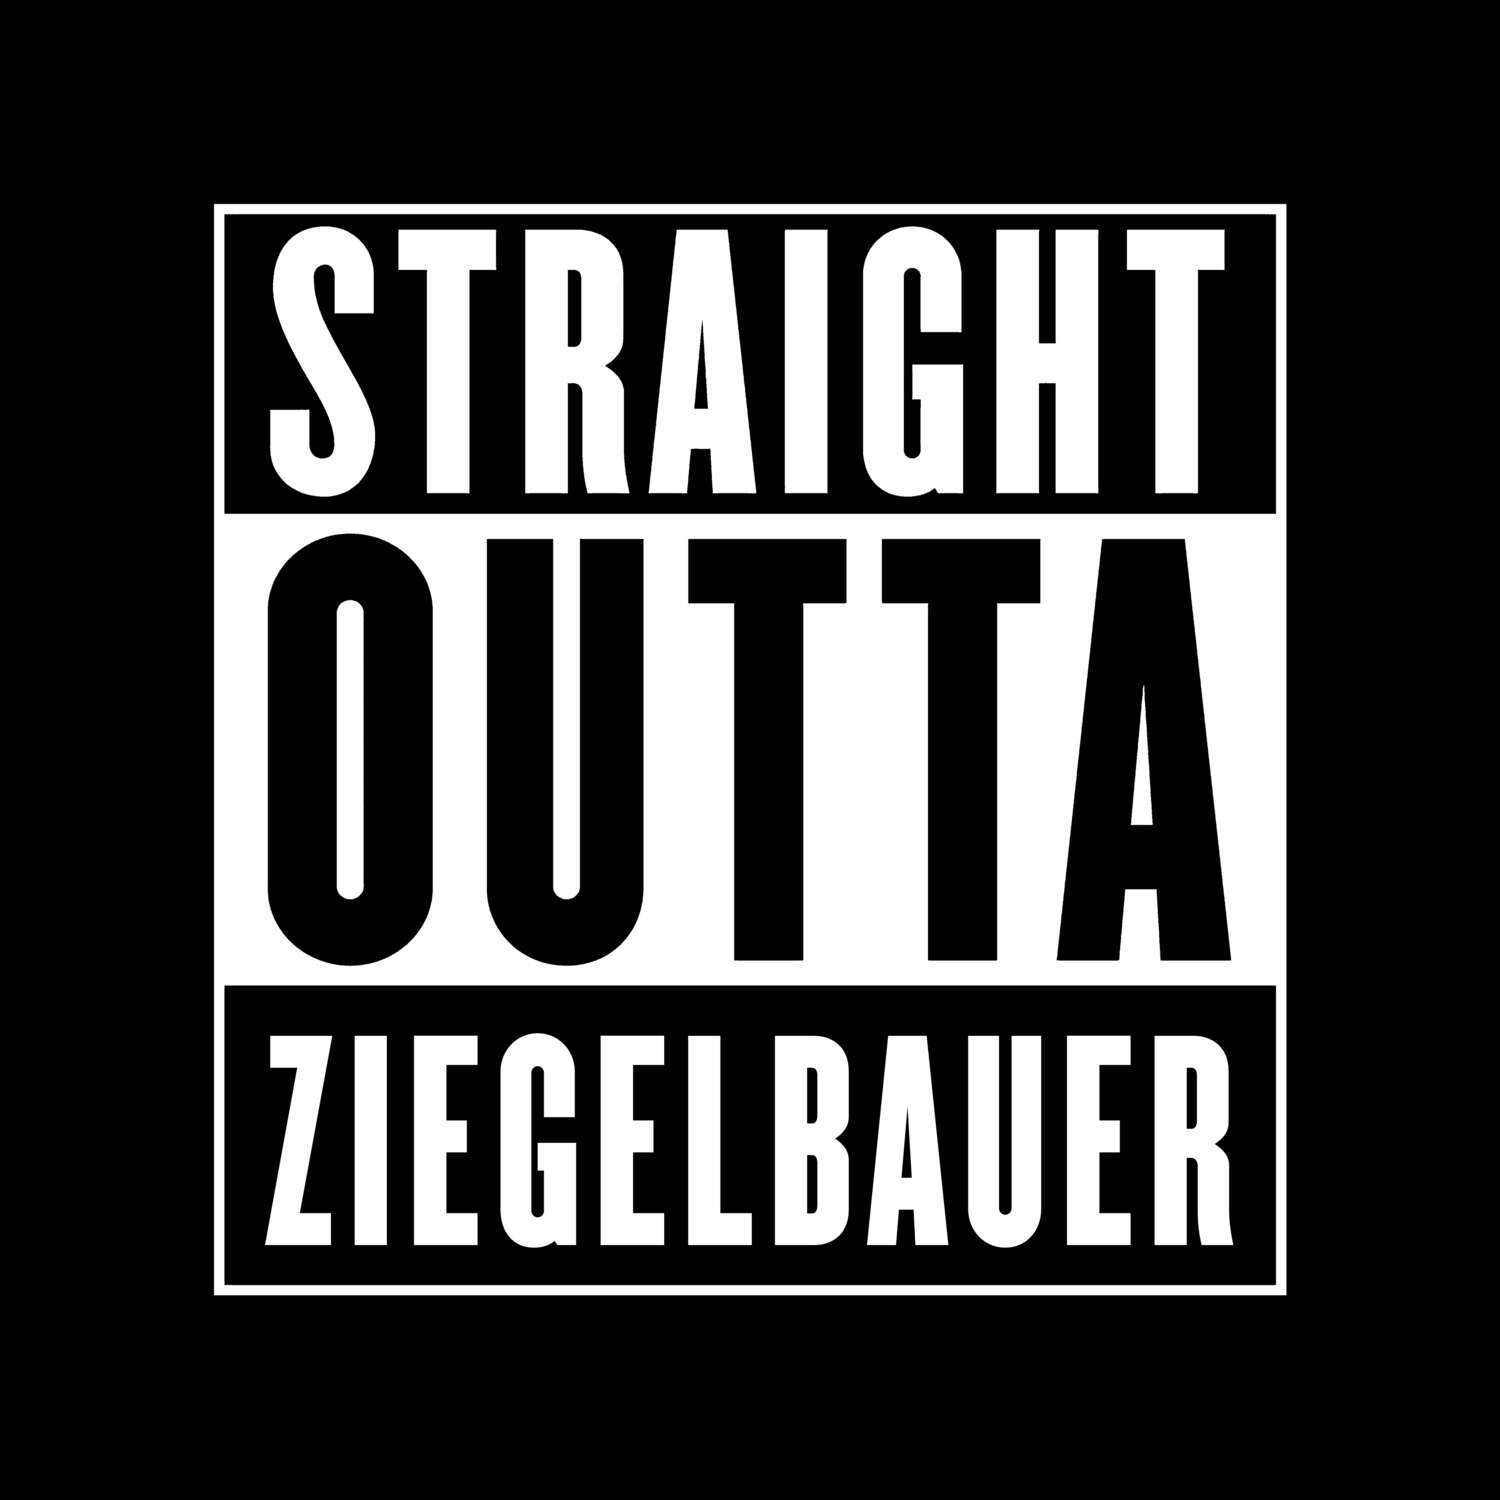 Ziegelbauer T-Shirt »Straight Outta«